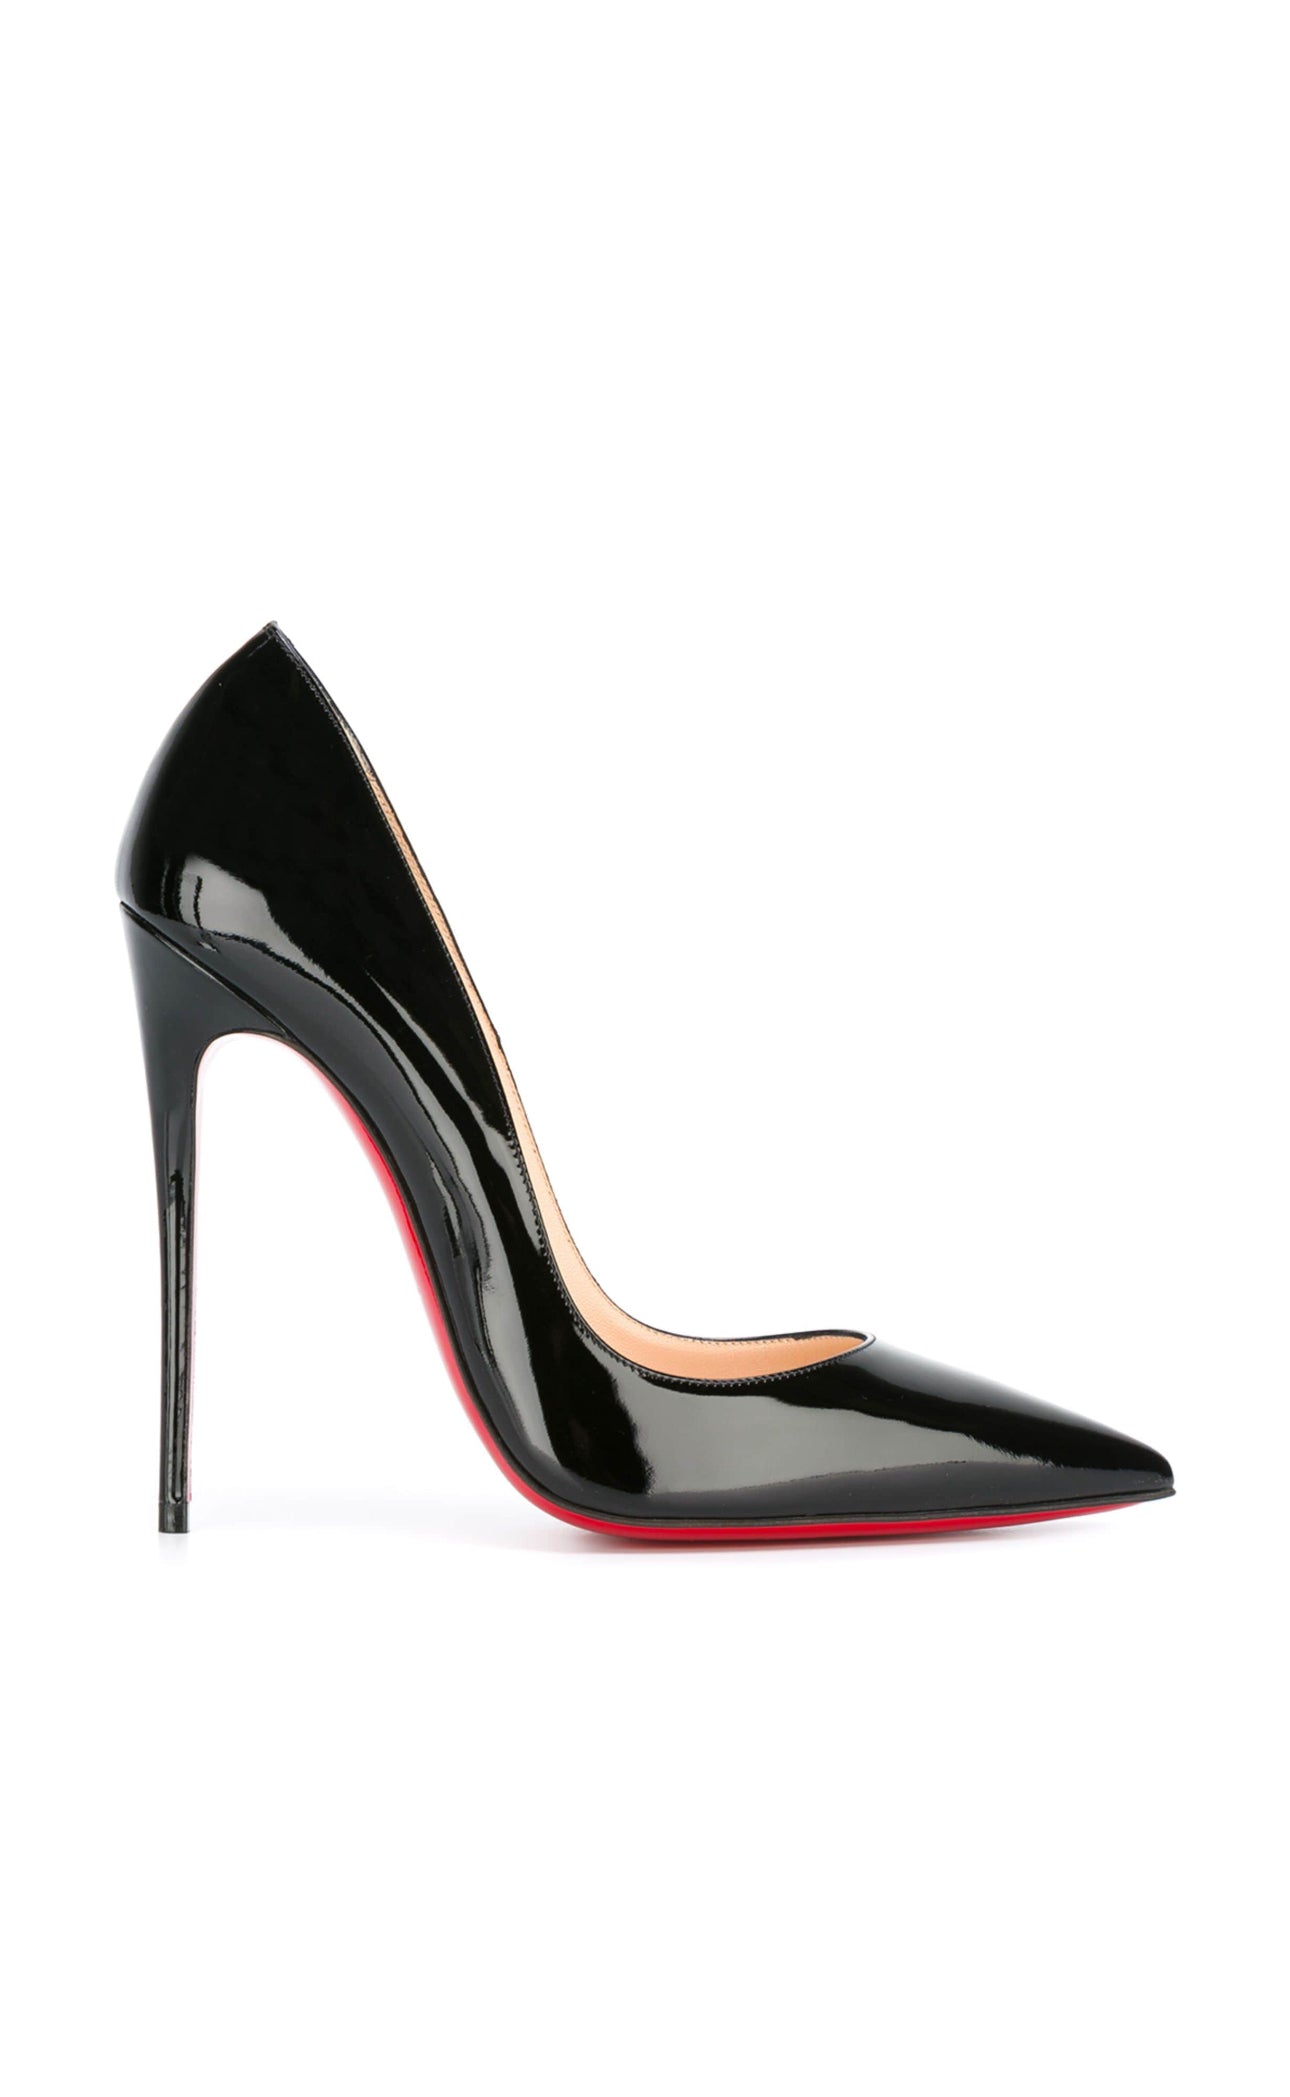 Închiriere pantofi Christian Louboutin -So Kate - 120 mm stiletto cu varf ascutit